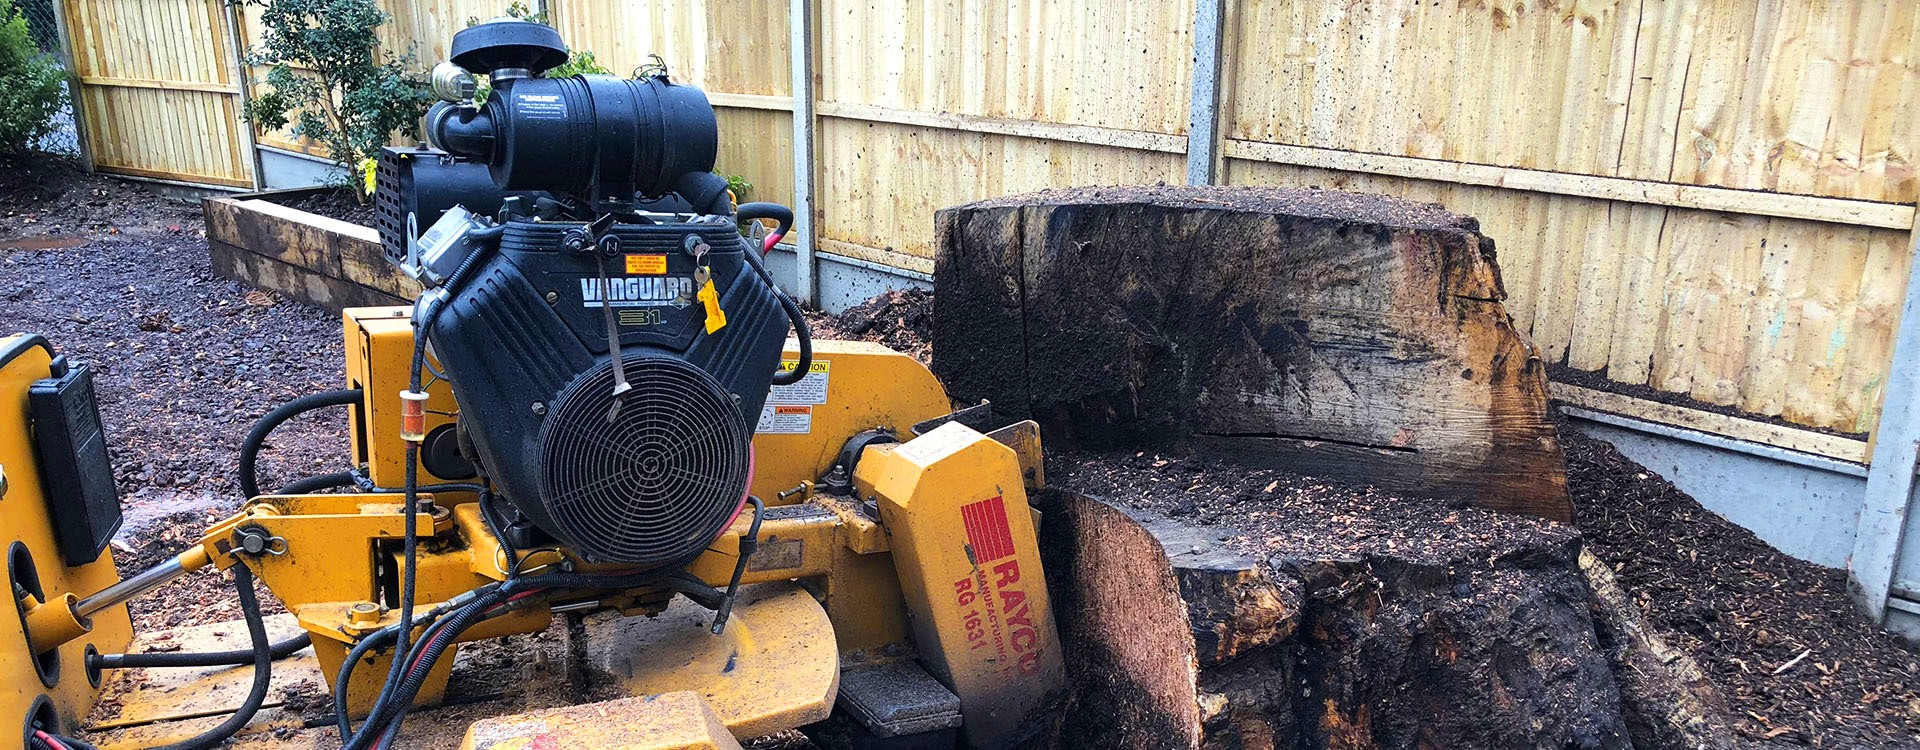 Tree Stump Removal - Stump Grinding Machine